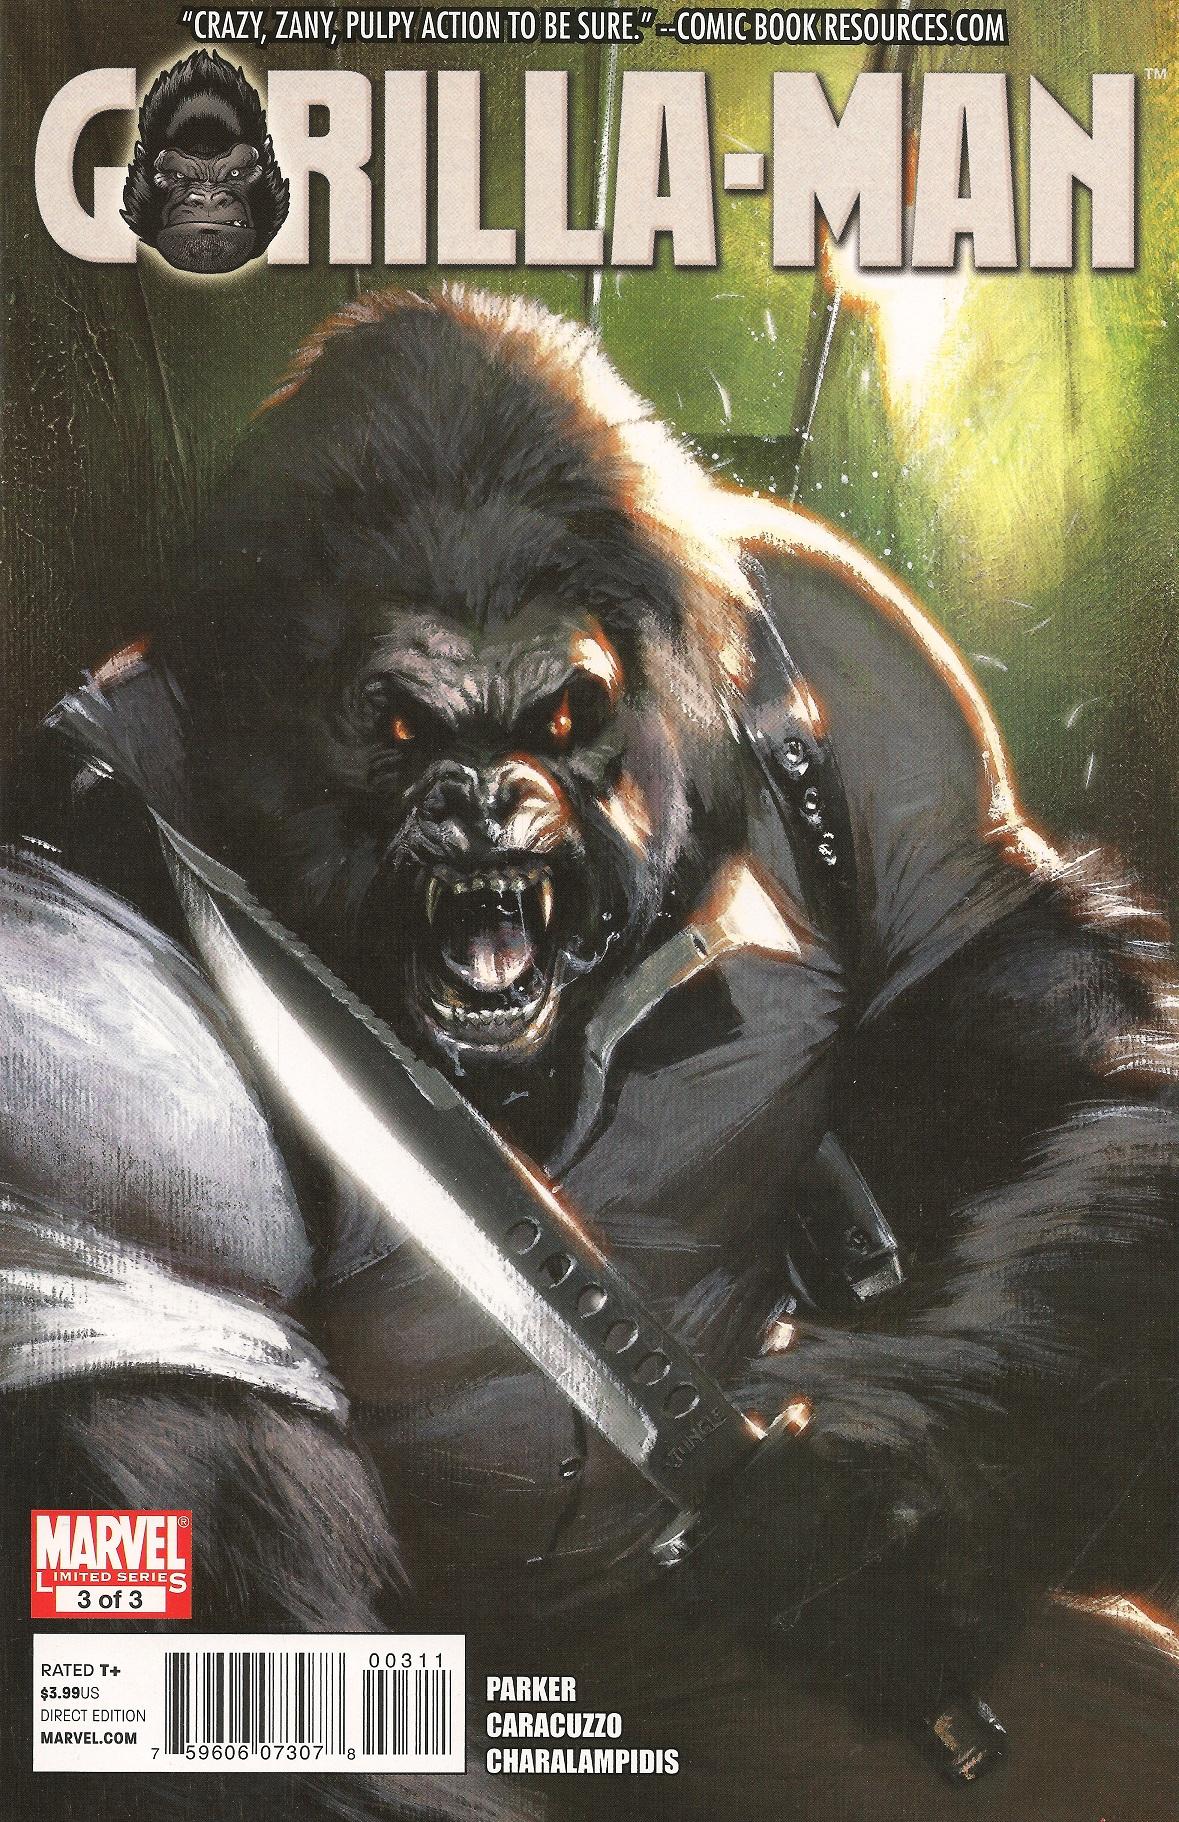 Gorilla Man Vol. 1 #3